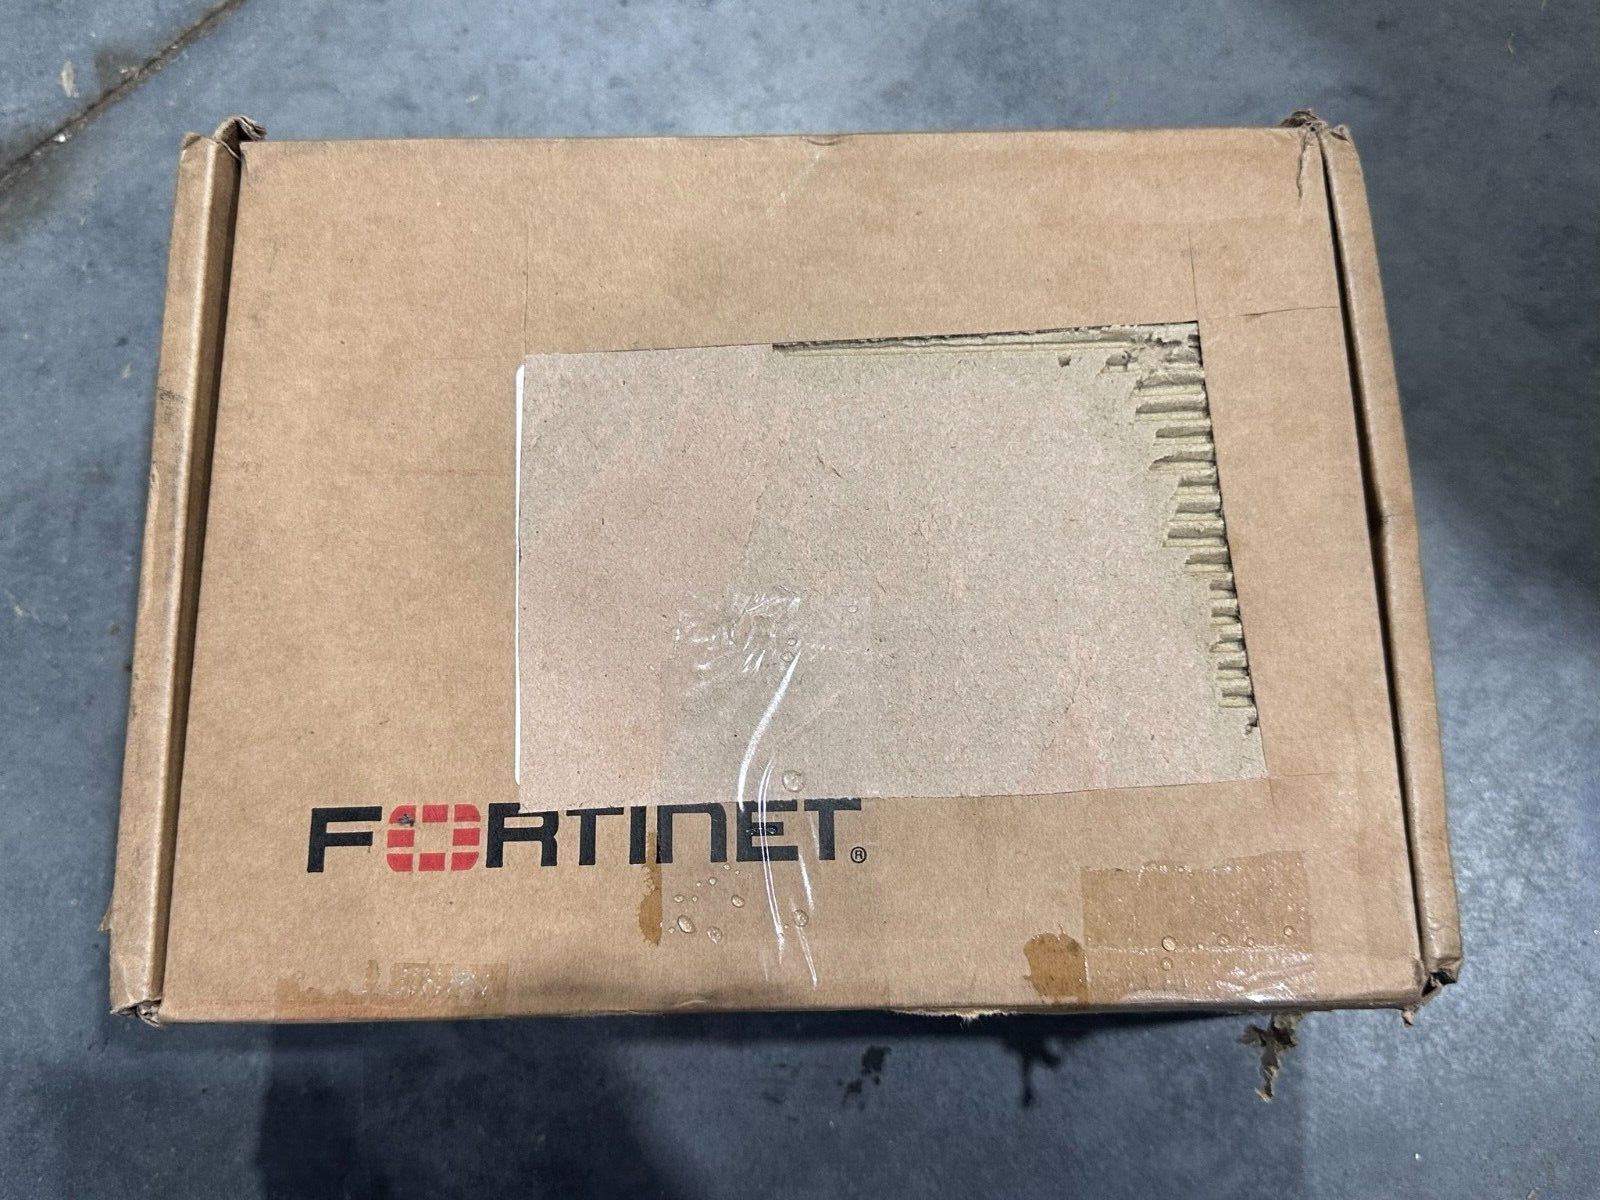 FORTINET FortiGate 60F FG-60F Firewall Appliance Open Box